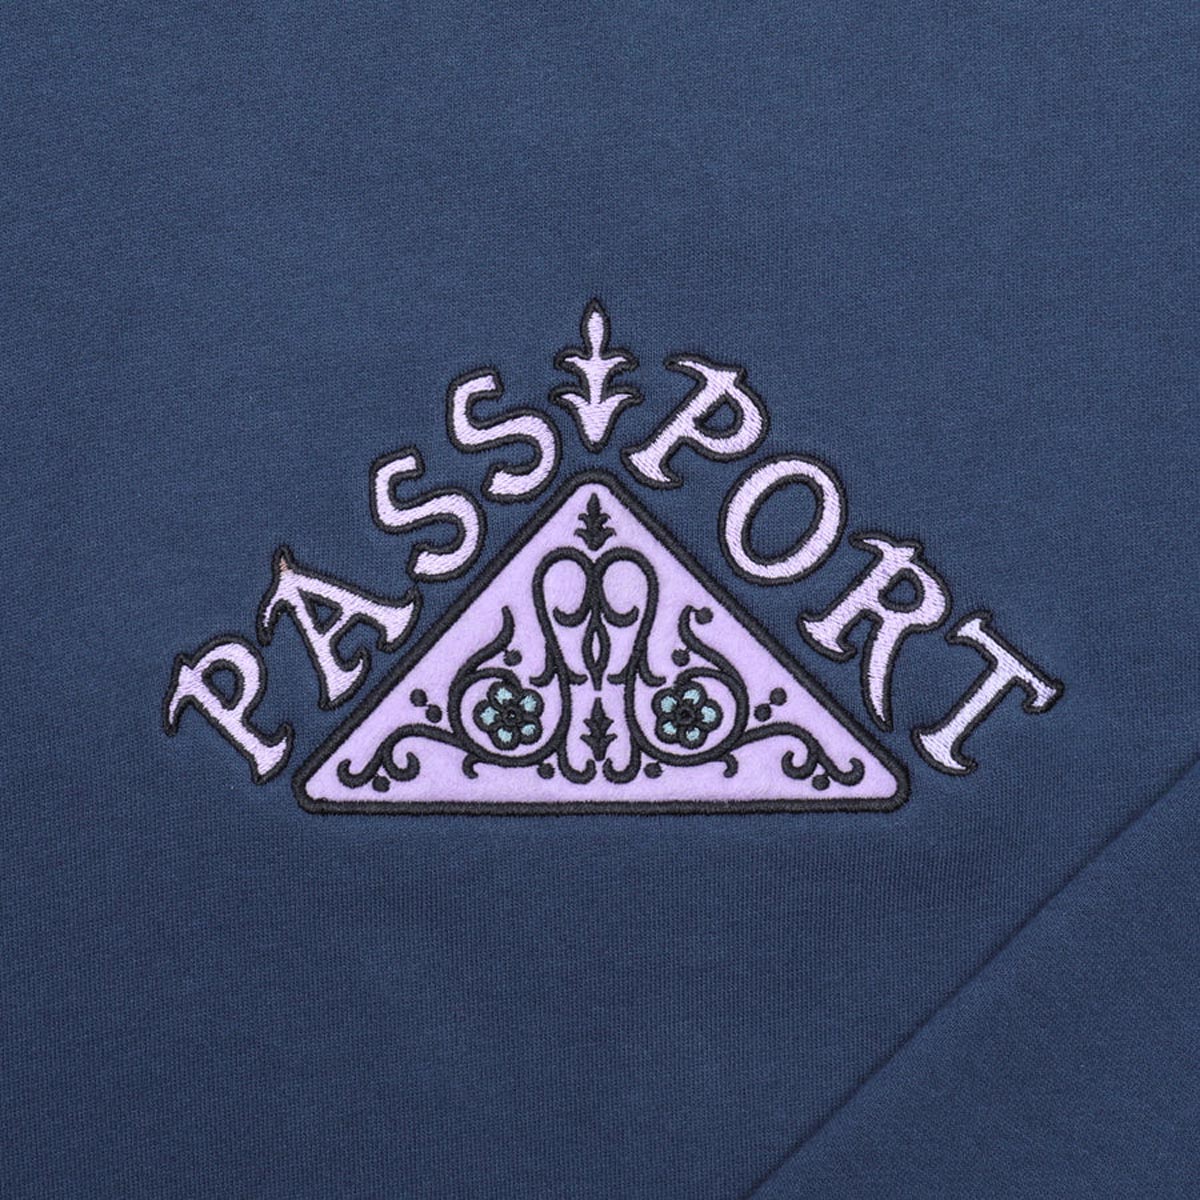 Passport Manuscript Sweater - Navy image 2